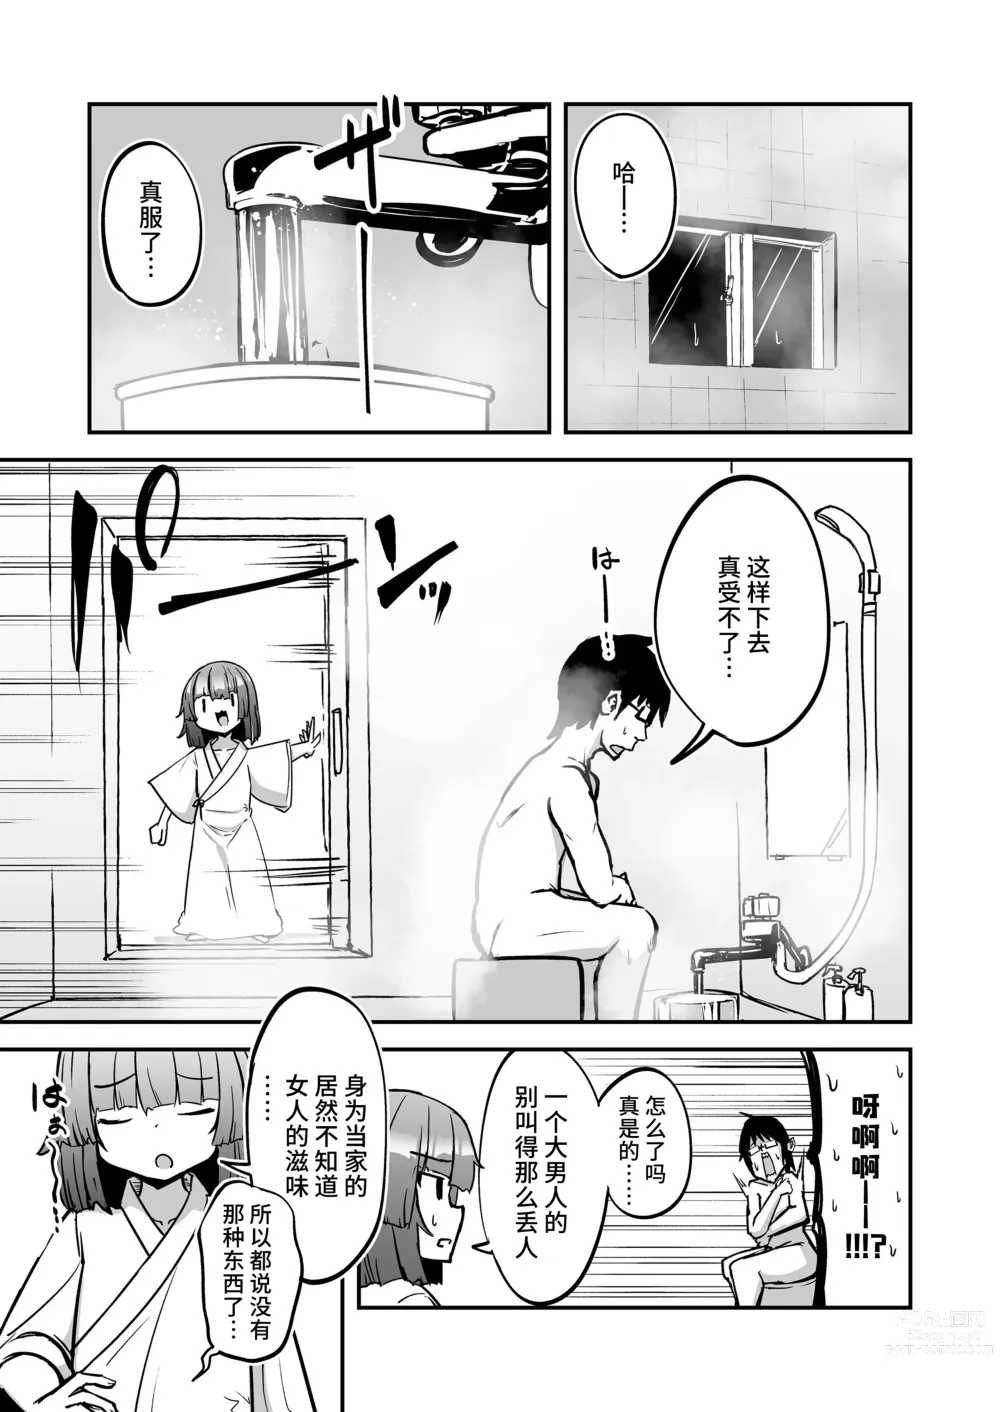 Page 9 of manga Oshiete Kureha-san 1+2